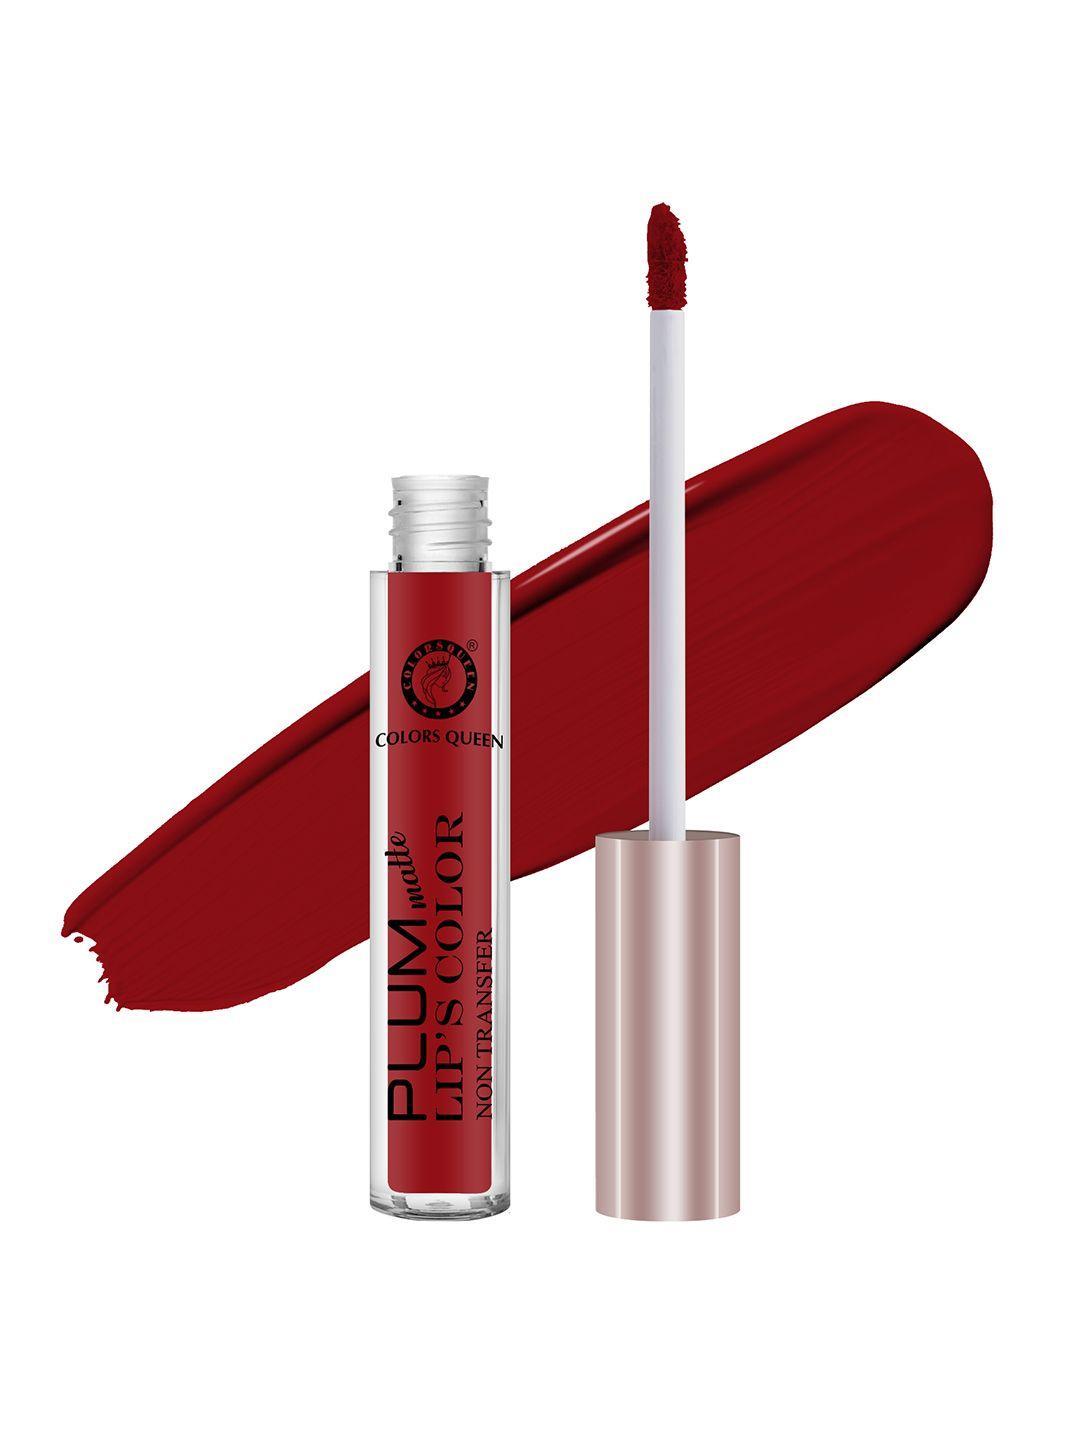 colors queen plum matte non-transfer waterproof liquid lipstick 7g - blood red 15